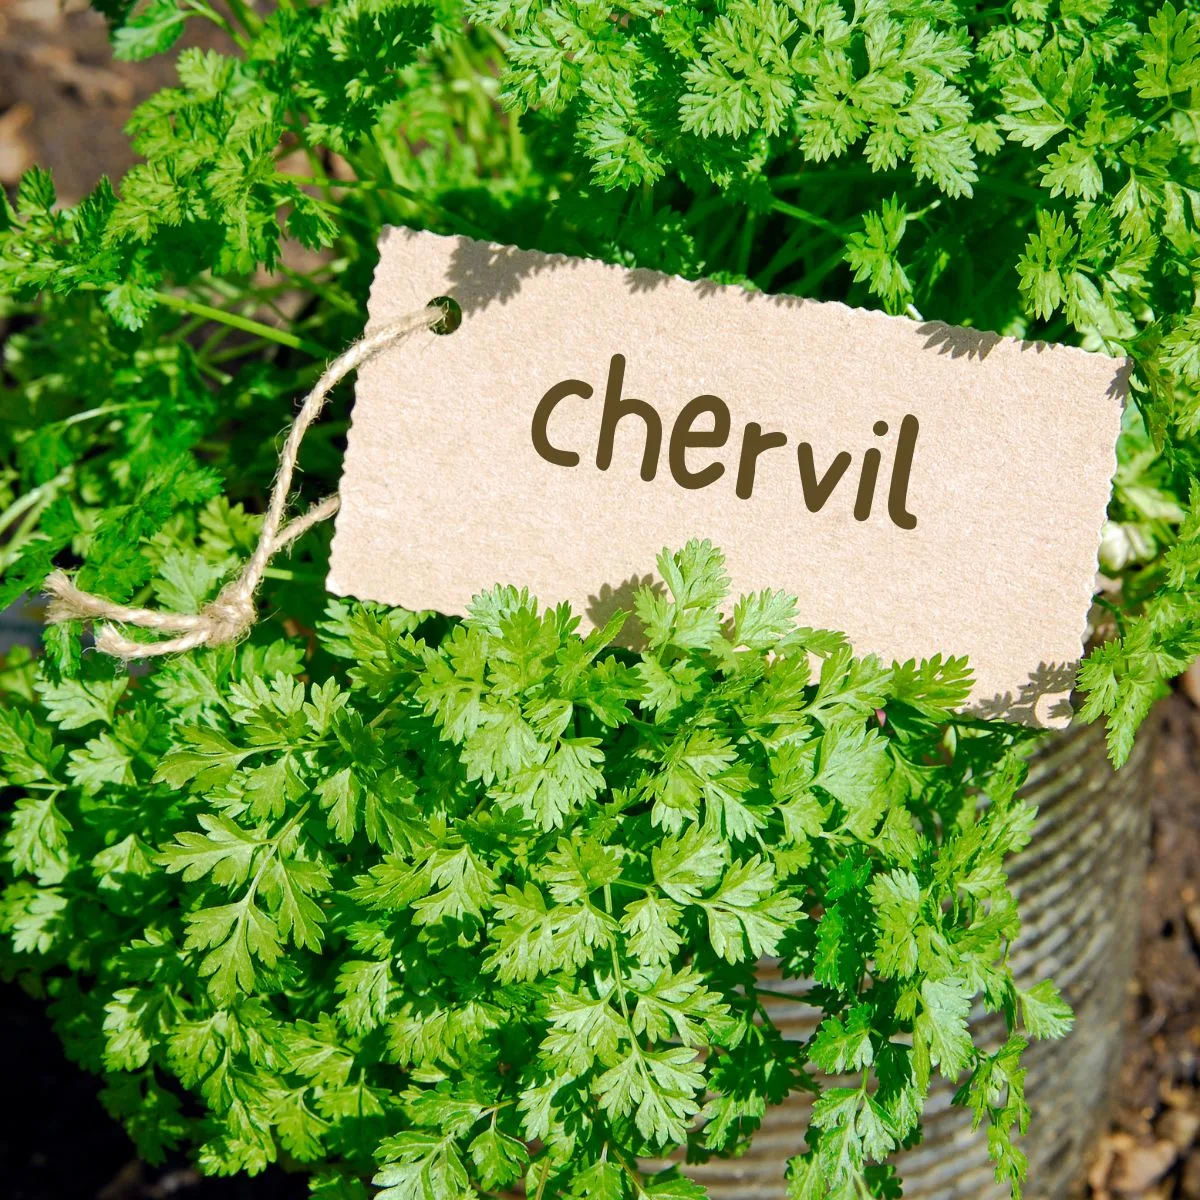 Chervil growing in a pot.